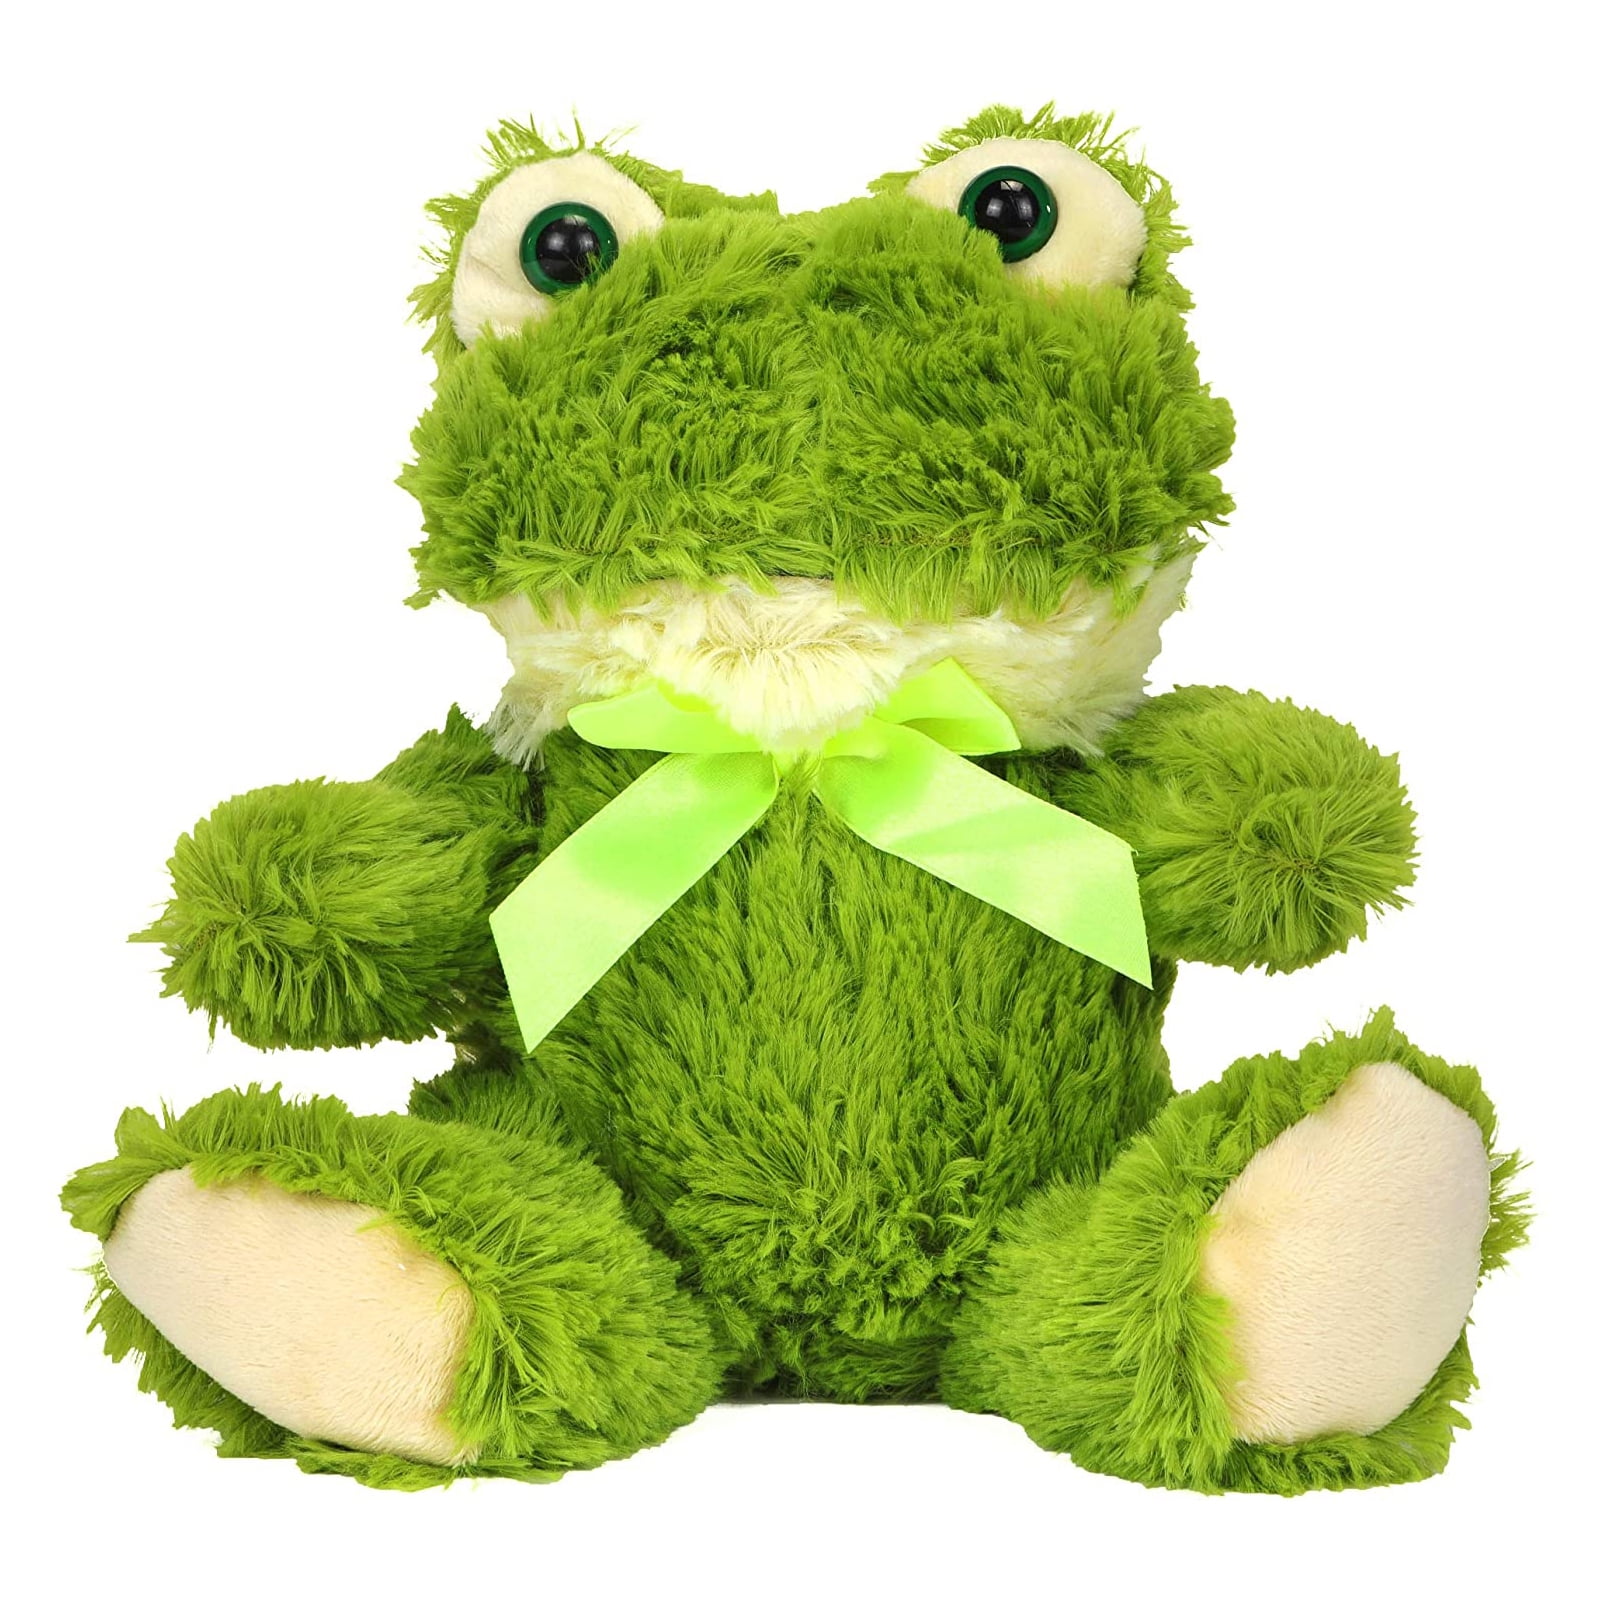 Zhaomeidaxi Soft Frog Stuffed Animal, Cute Frog Plush Toy, Long-Leg Plush Frog Doll, Adorable Stuffed Frog Plushies Gift for Kids Children Baby Girls